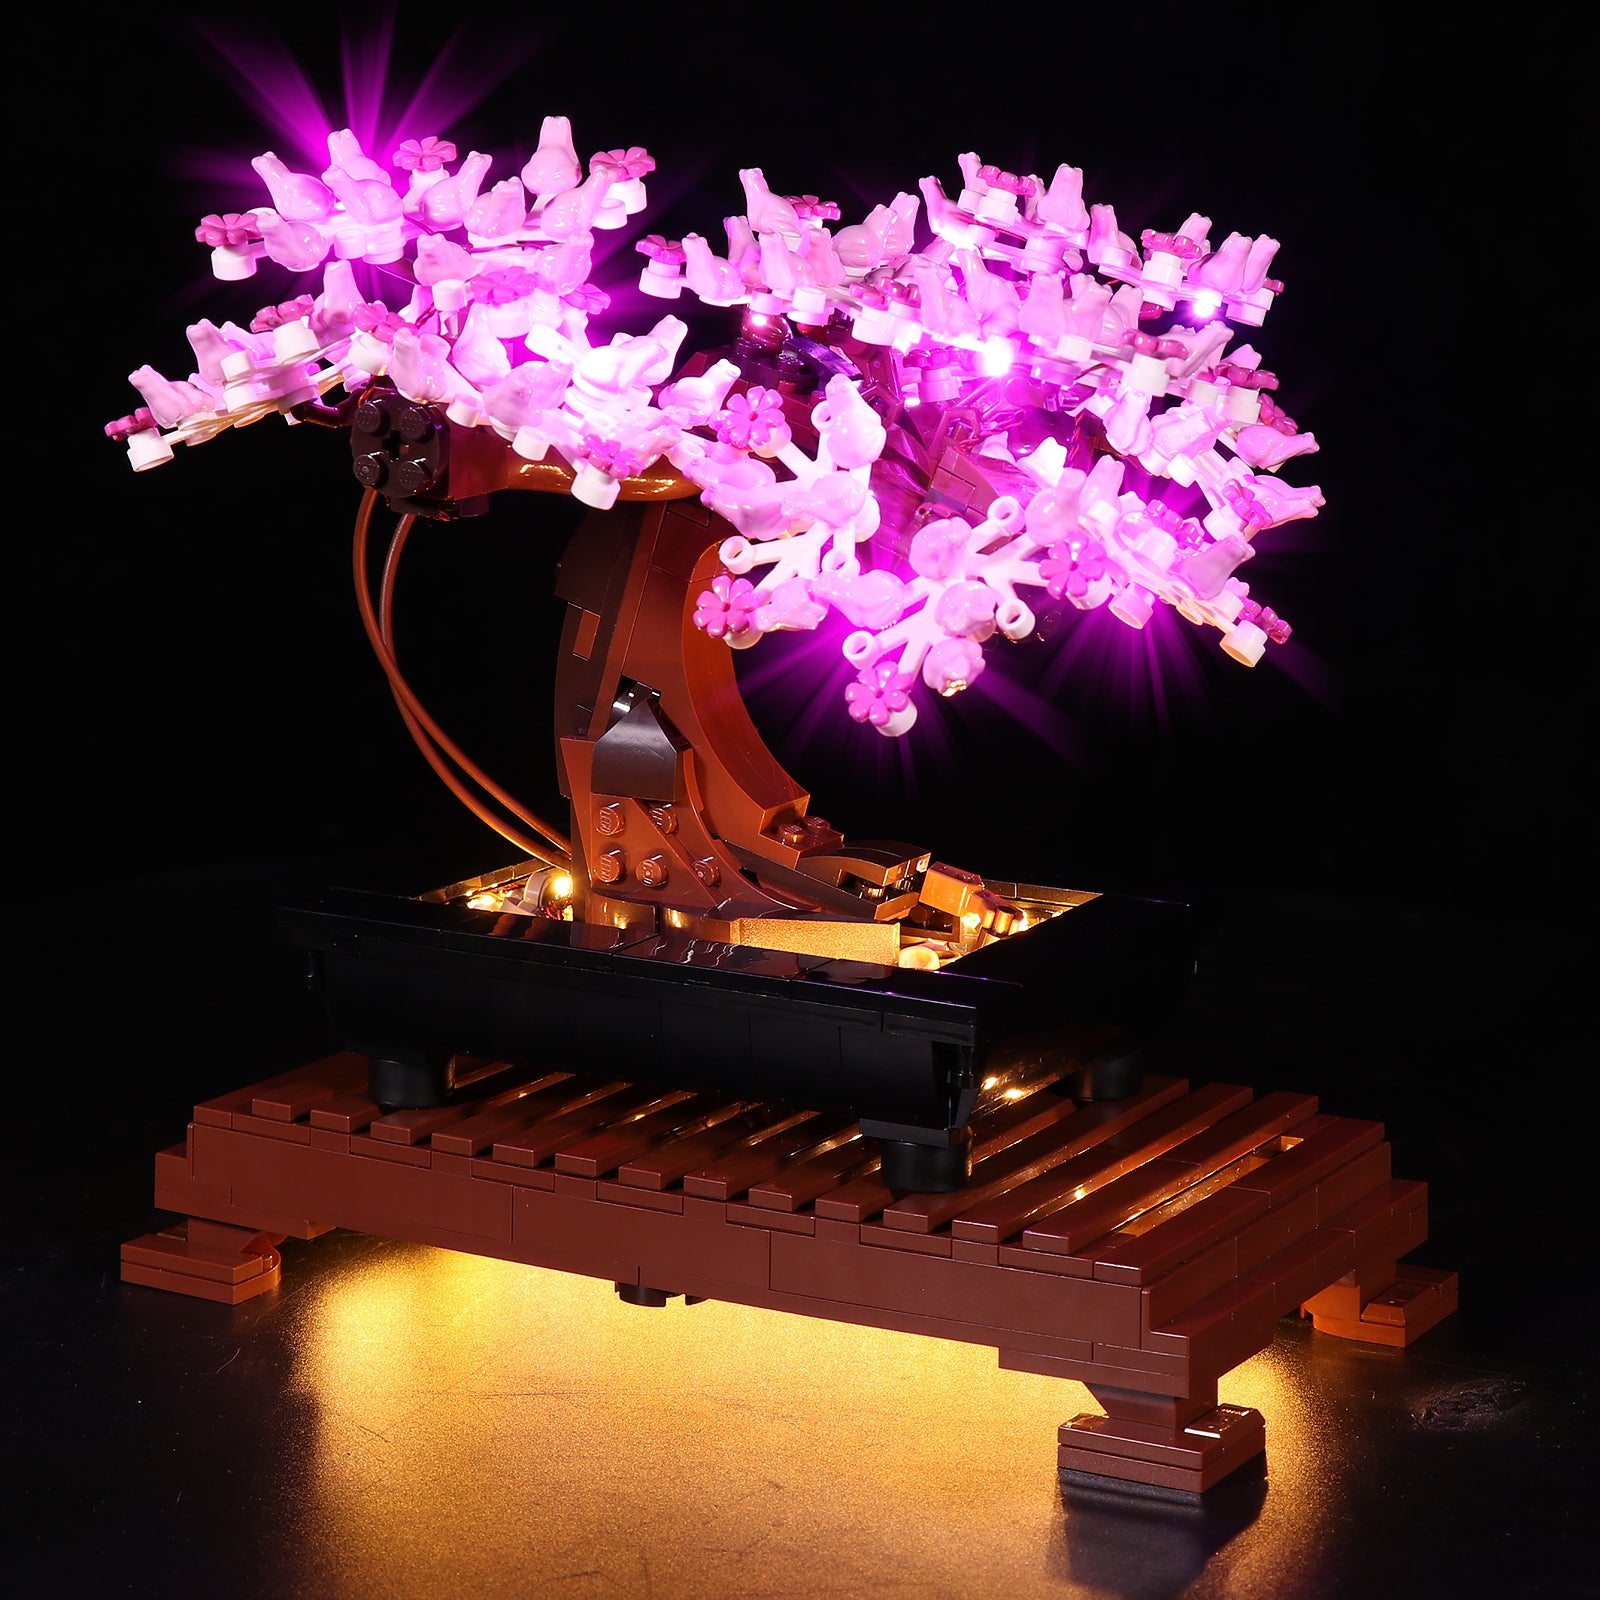 LEGO Bonsai Tree - 10281